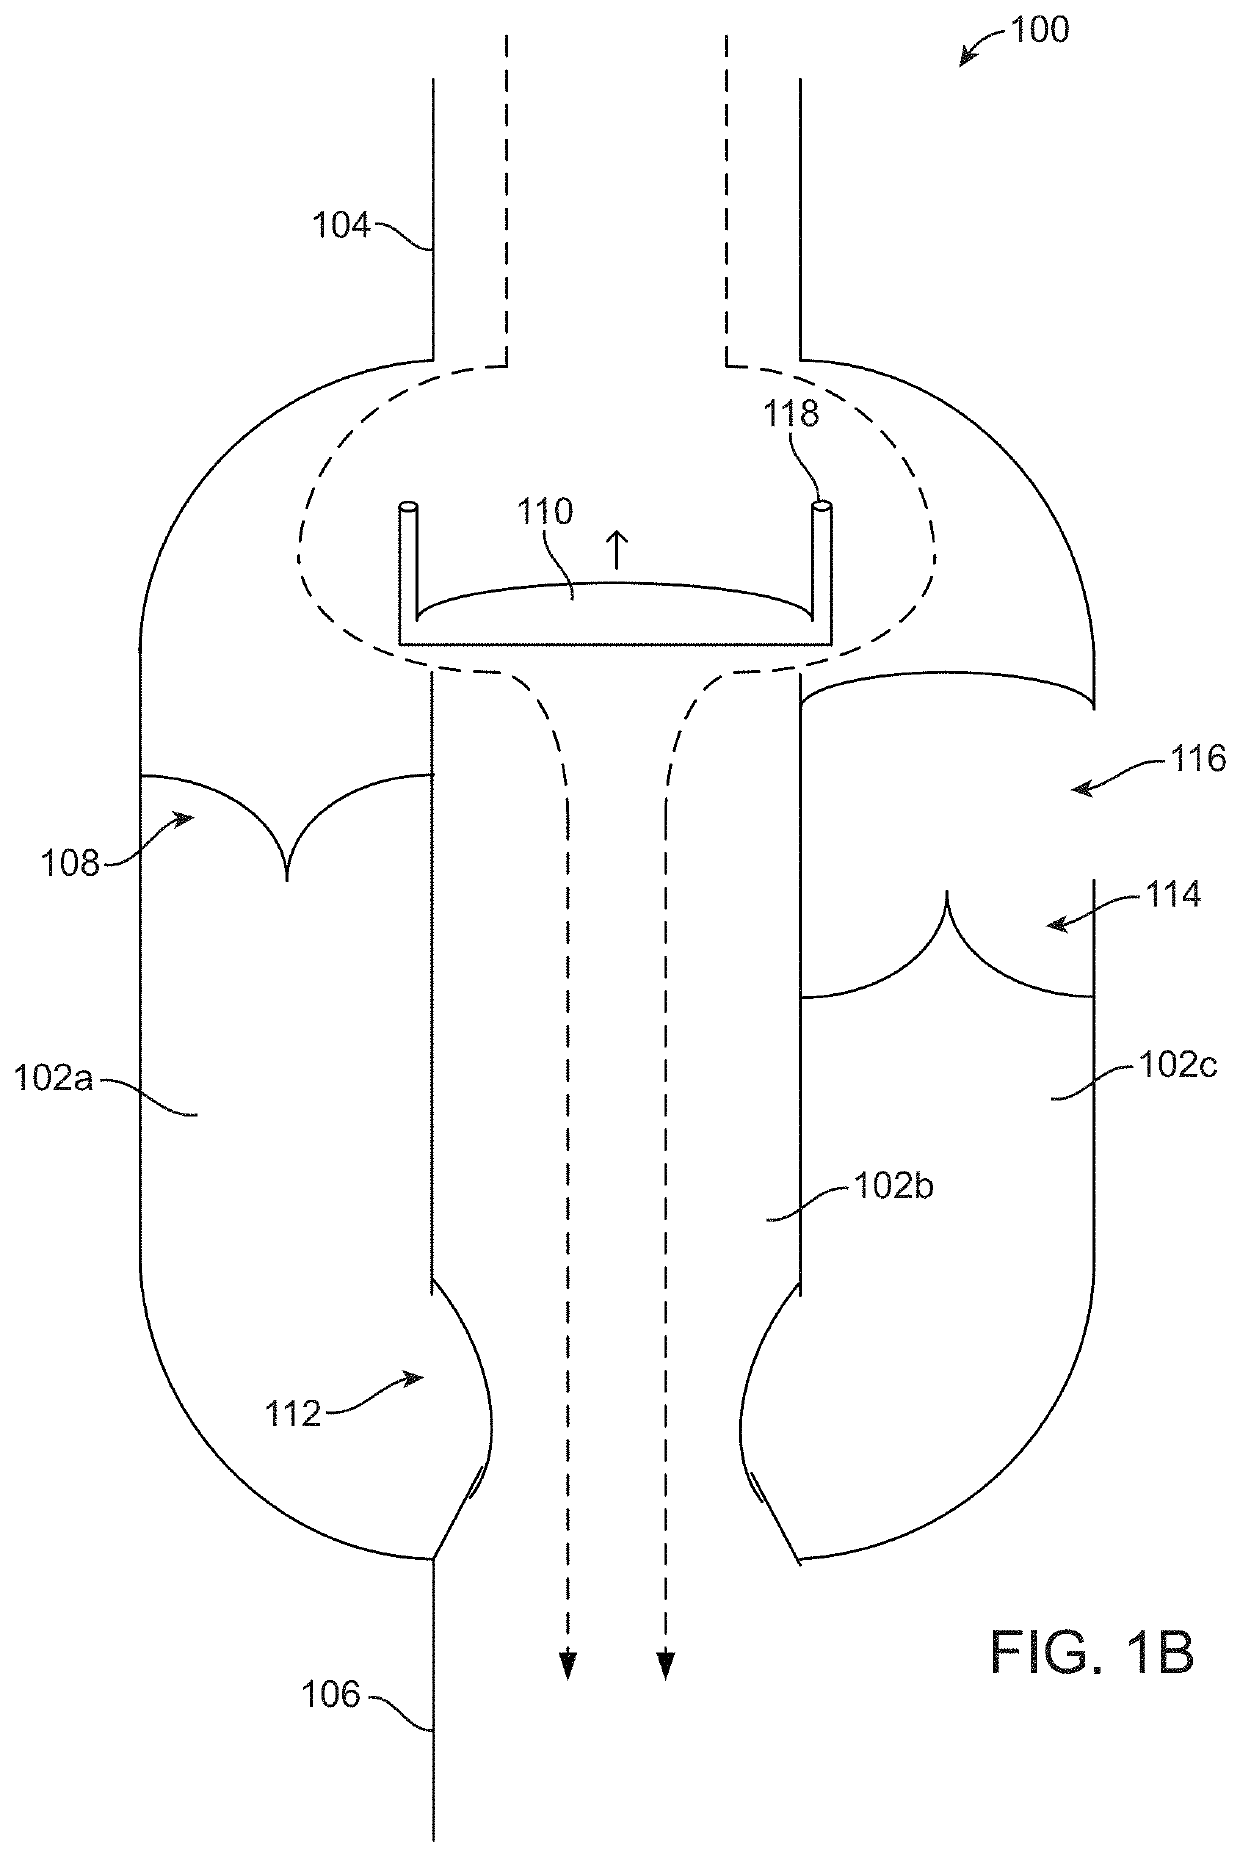 Inspiratory resistor valve system with expiratory port